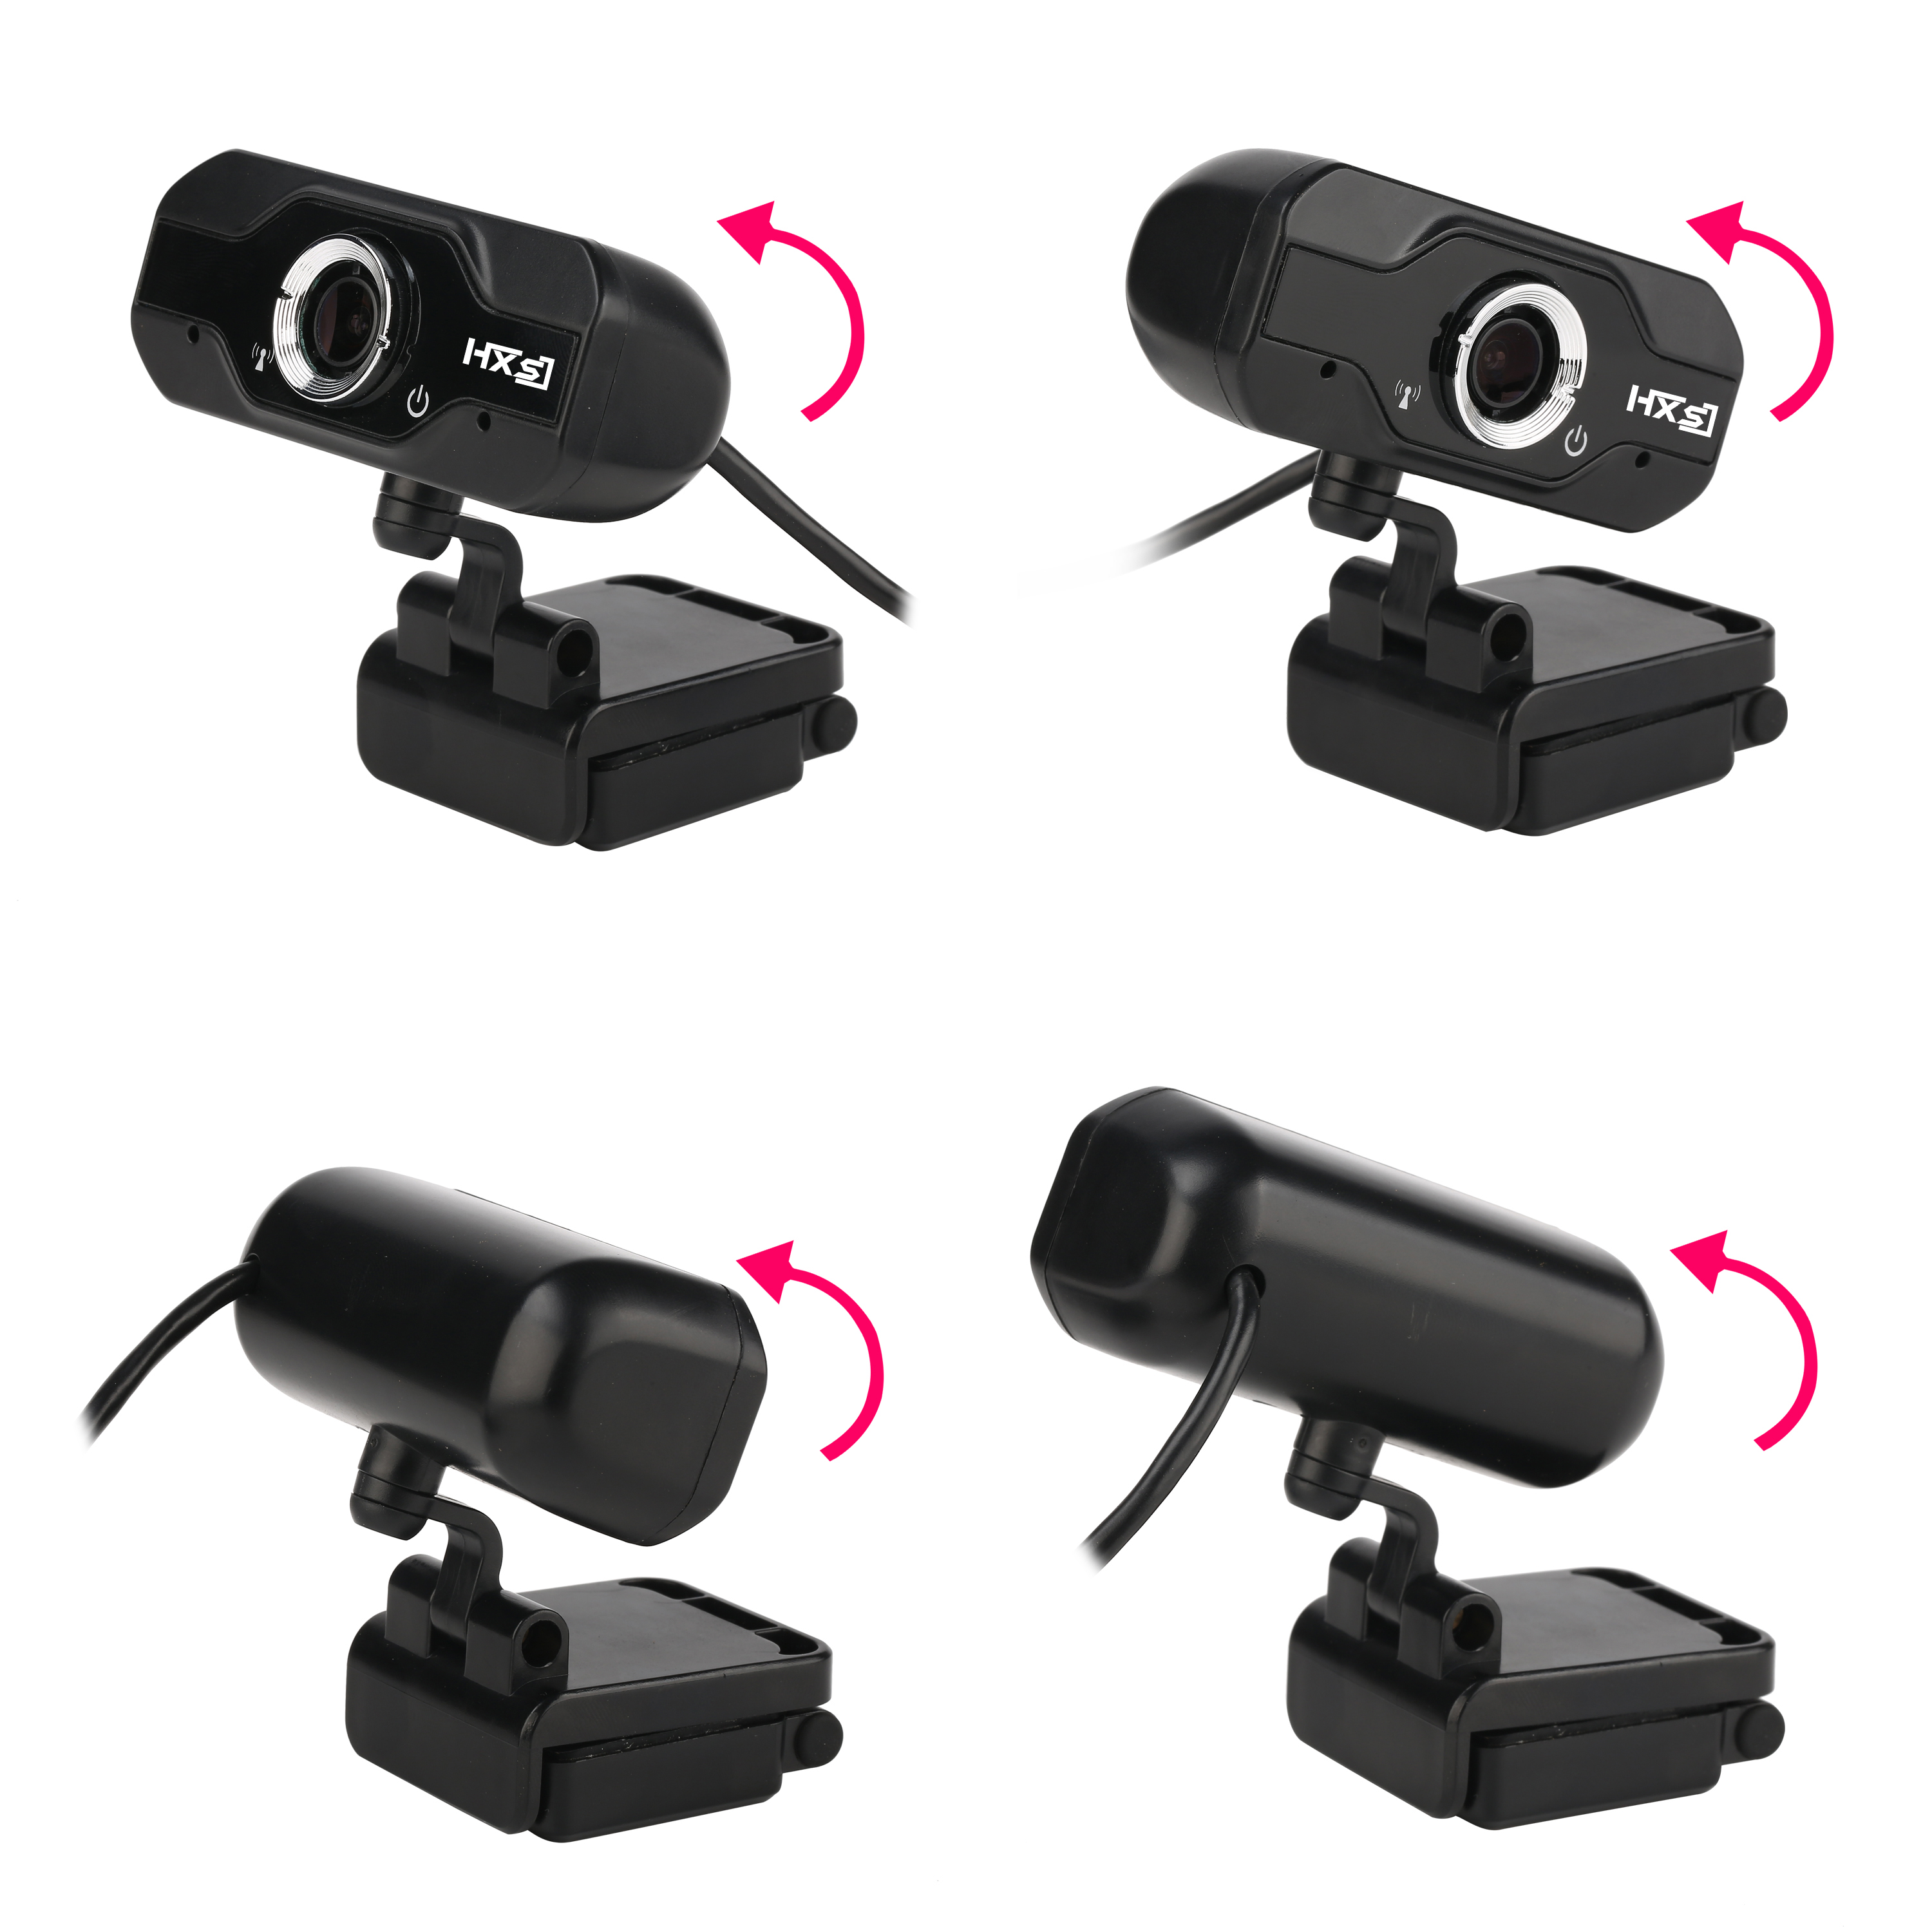 HXSJ HD 720P CMOS Sensor Webcam Built-in Microphone Adjustable Angle for Laptop Desktop 9